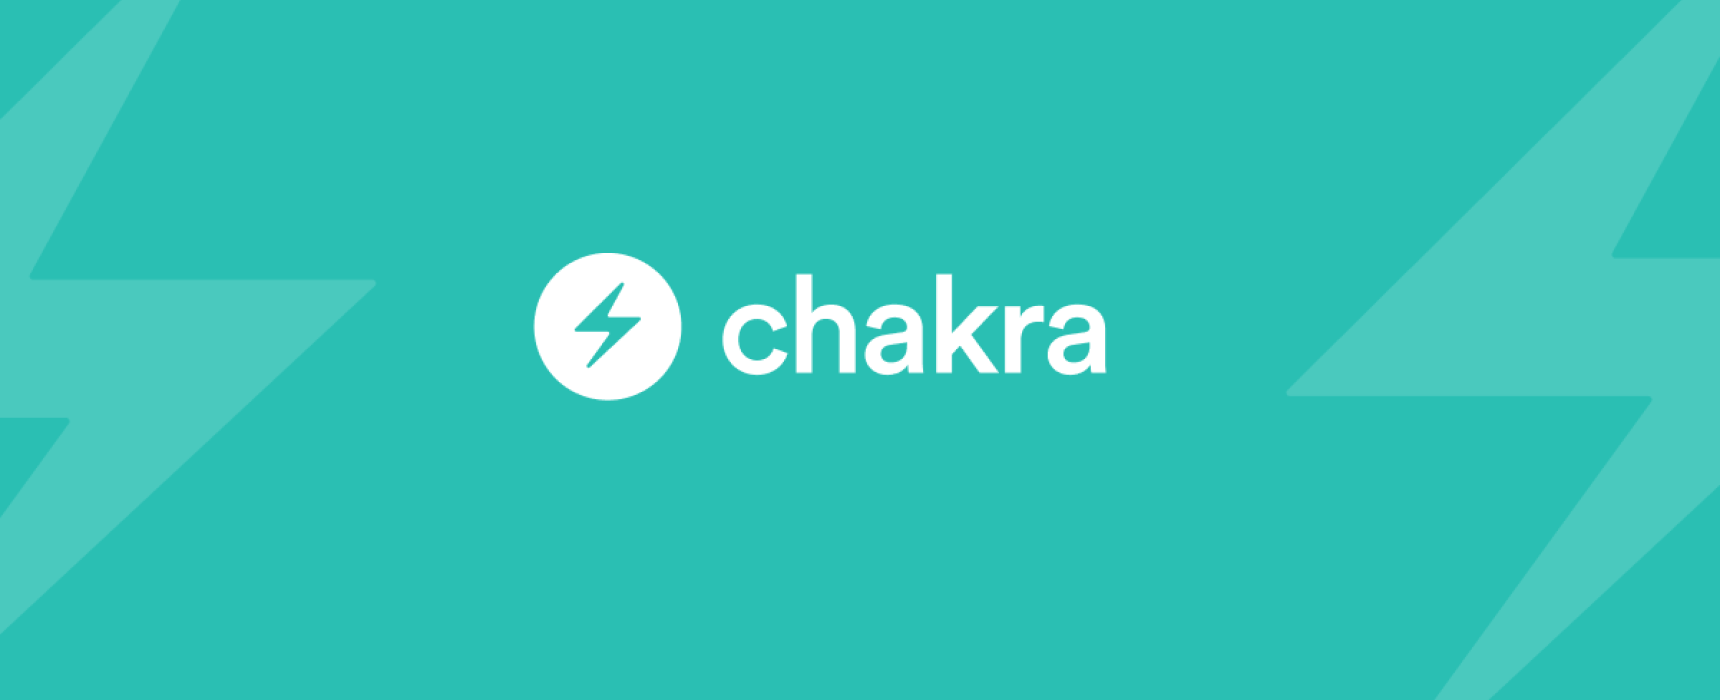 Chakra UI - Reusable React Components Framework